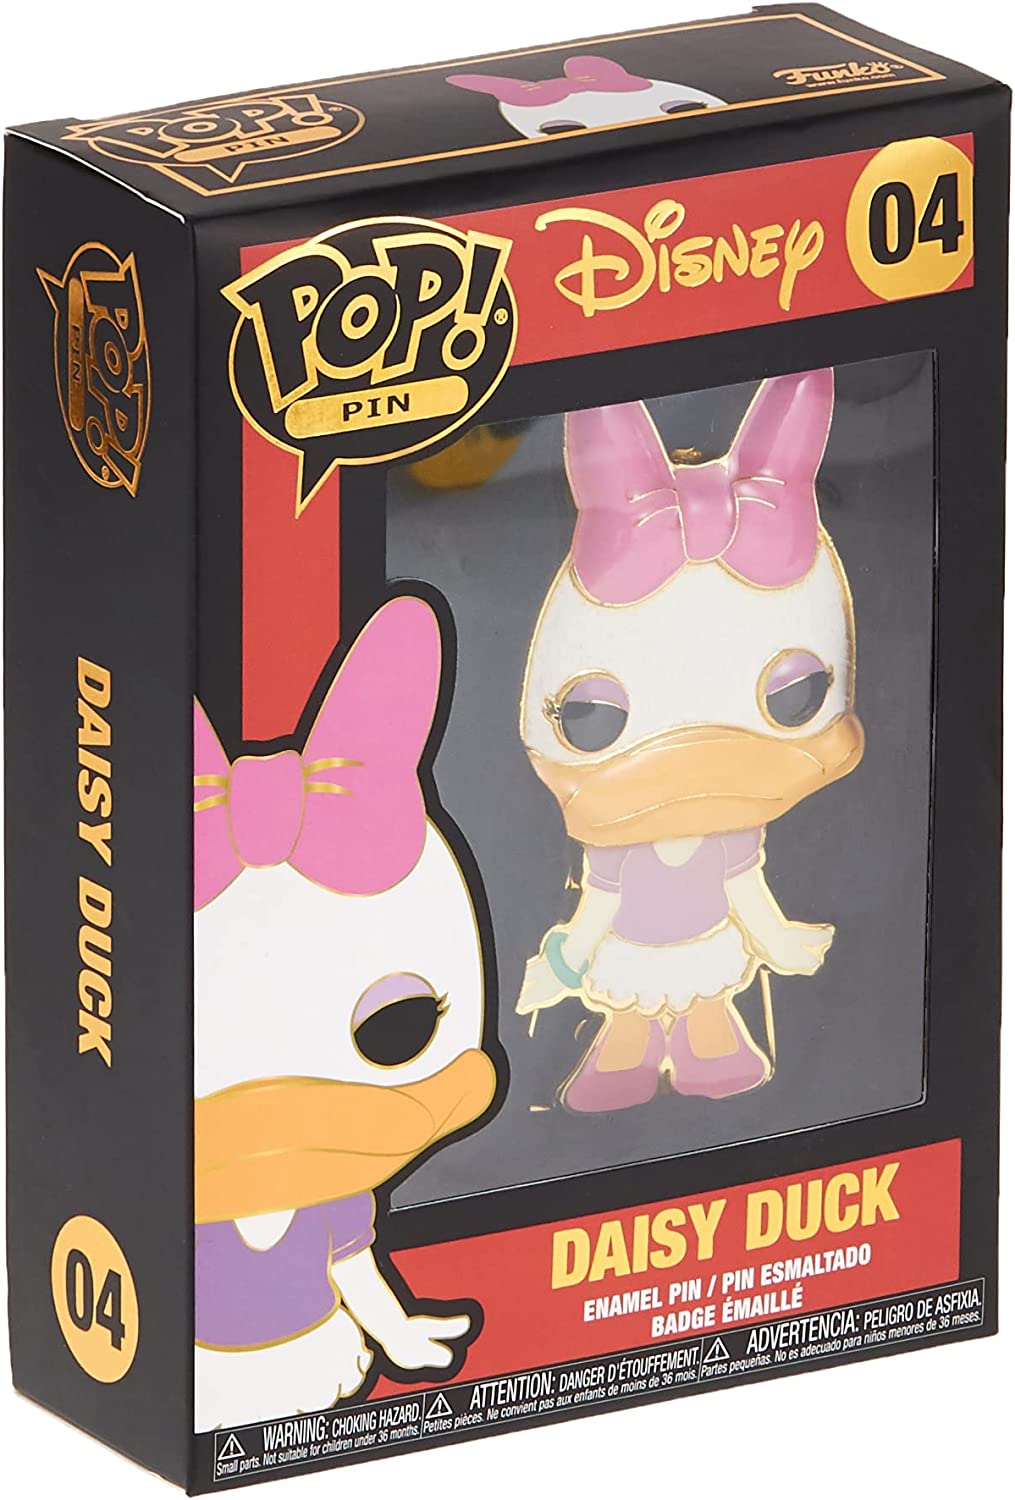 Disney Daisy Duck Funko 31254 Pop! Vinyl #04